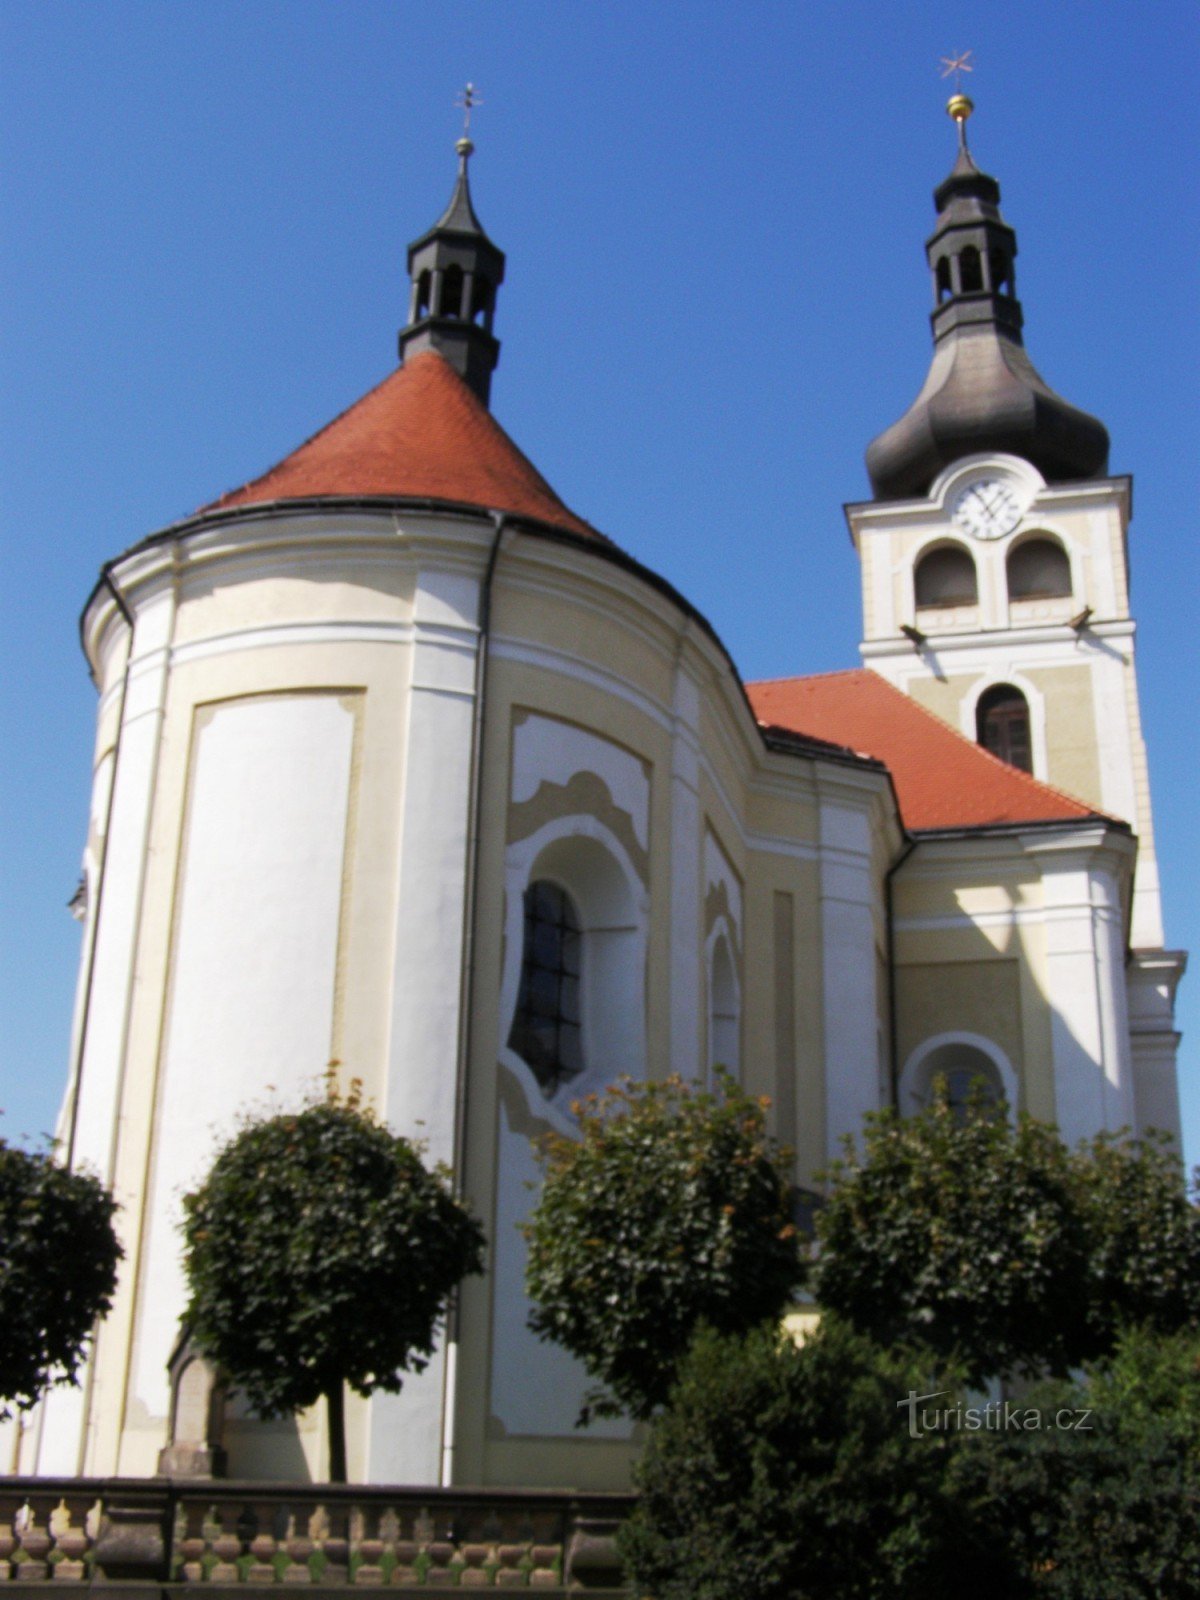 Hořice - biserica